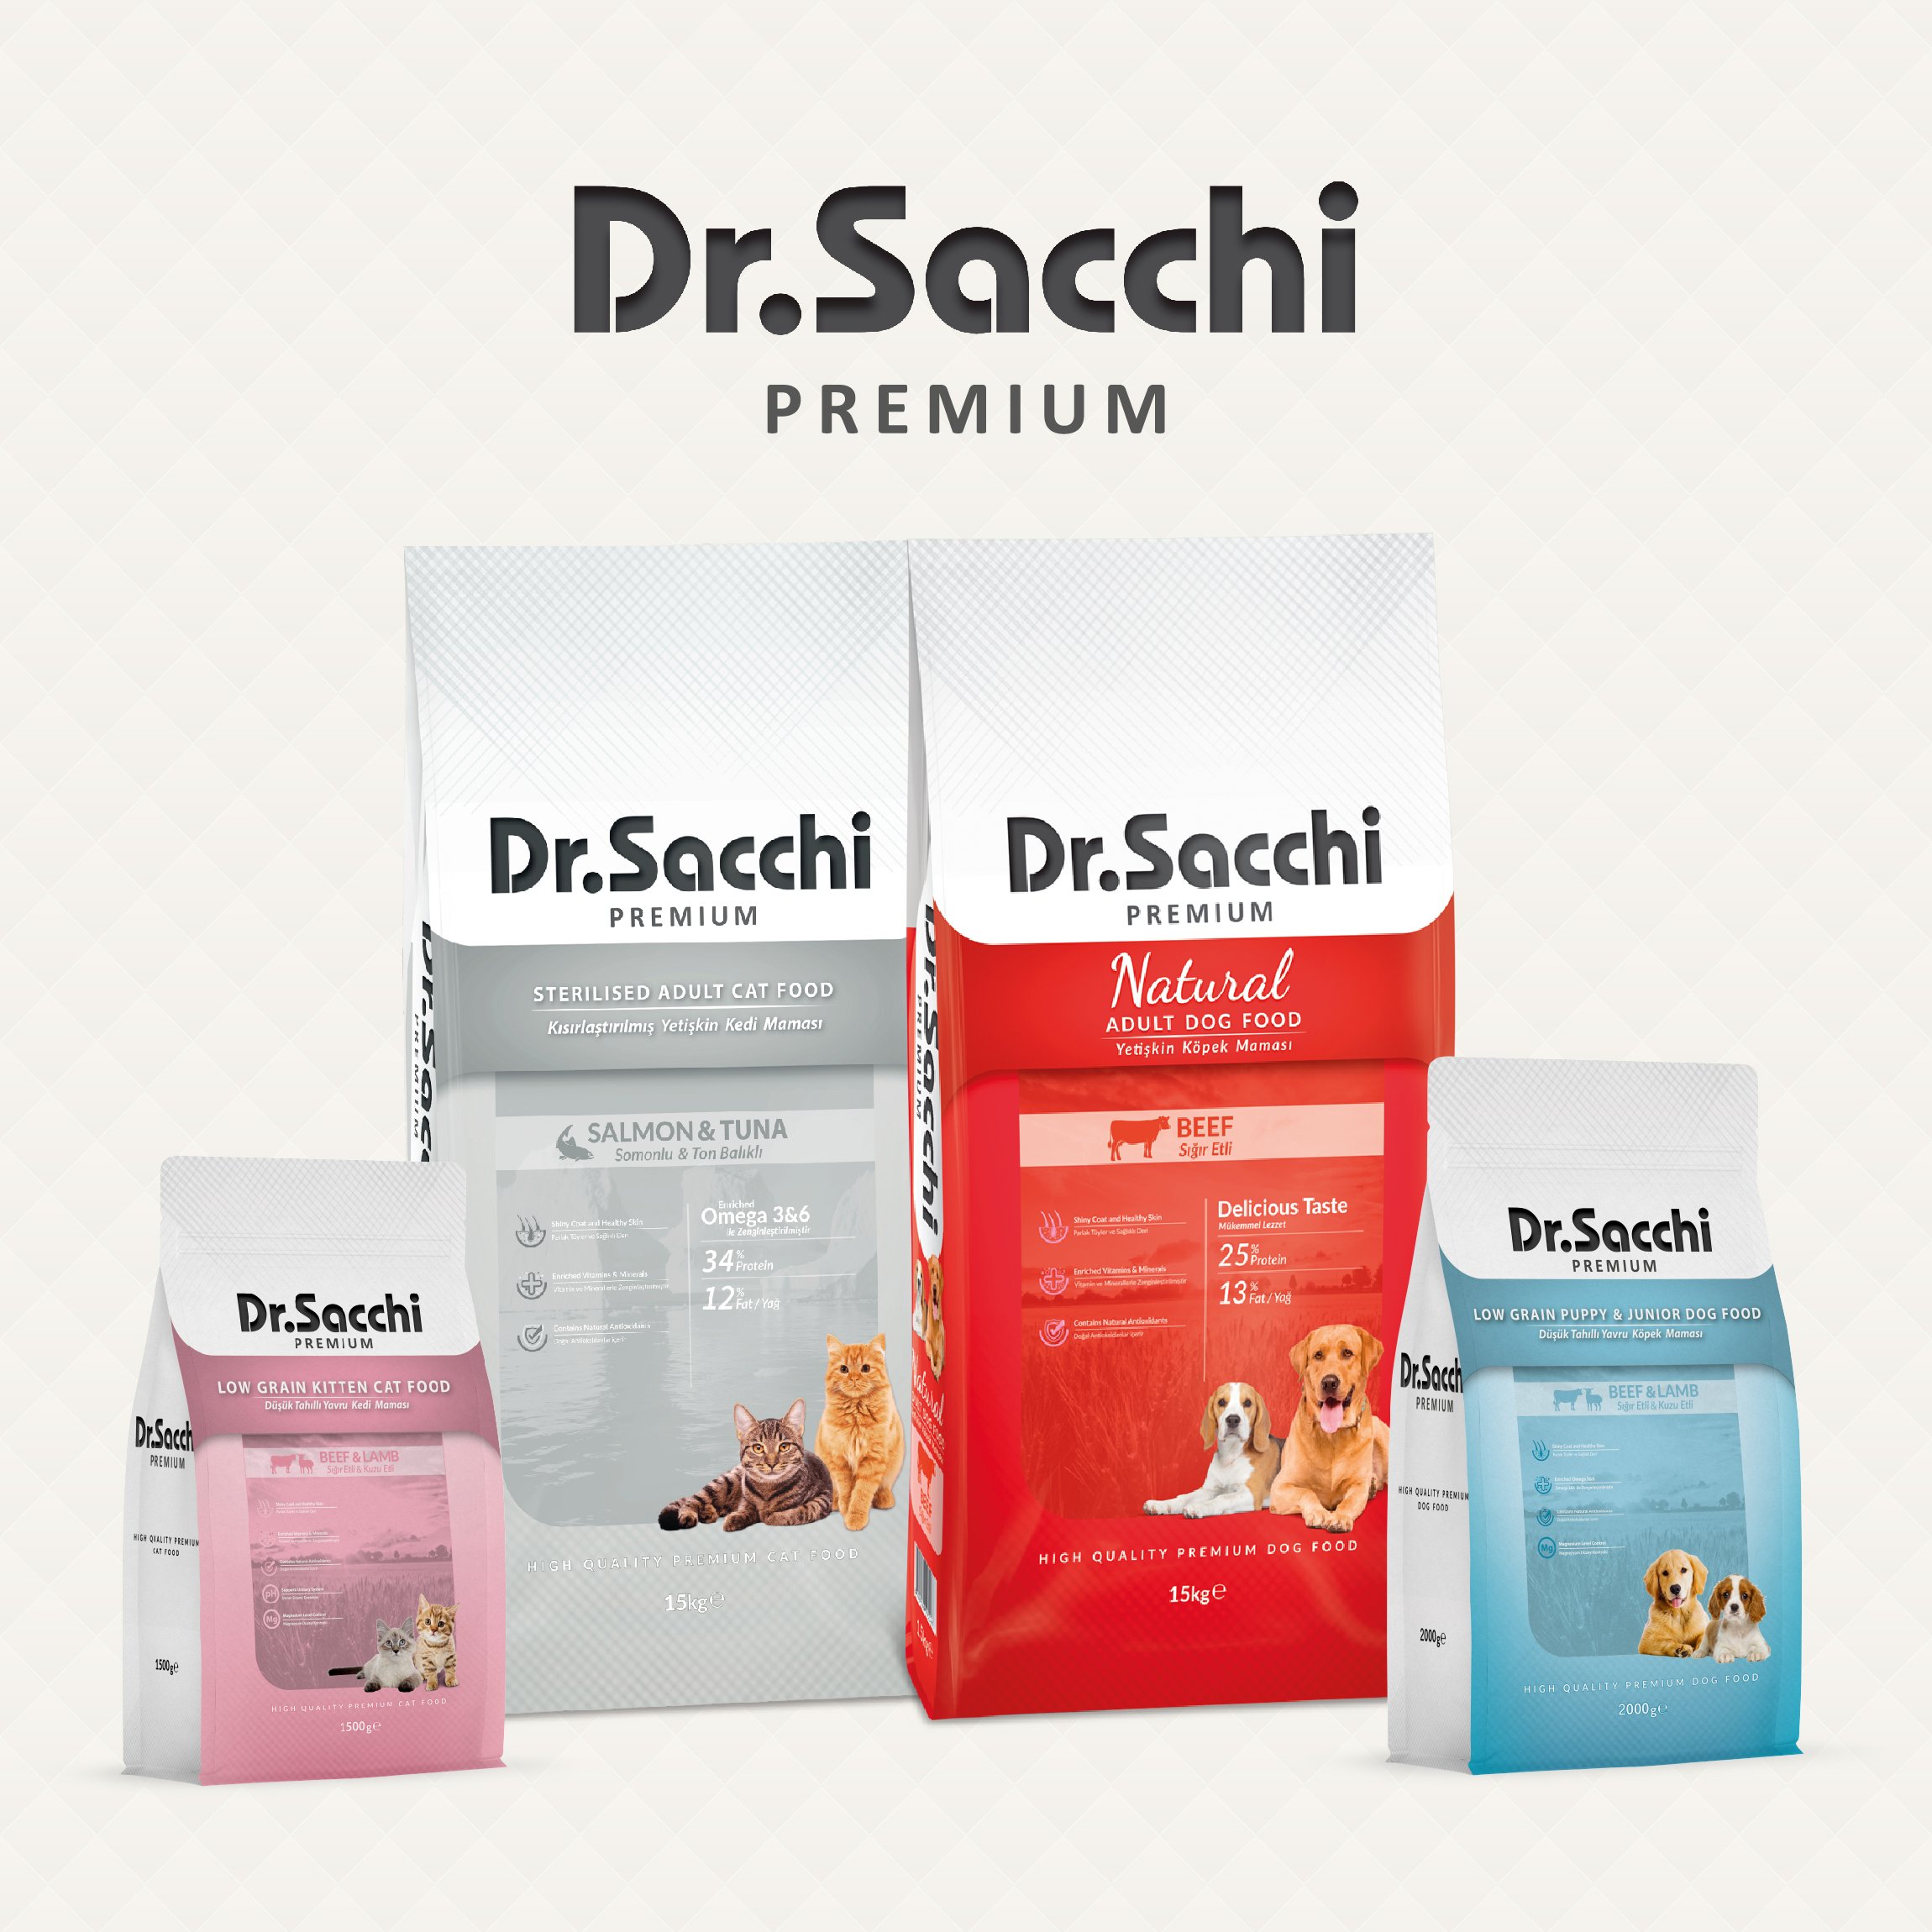 Dr.Sacchi